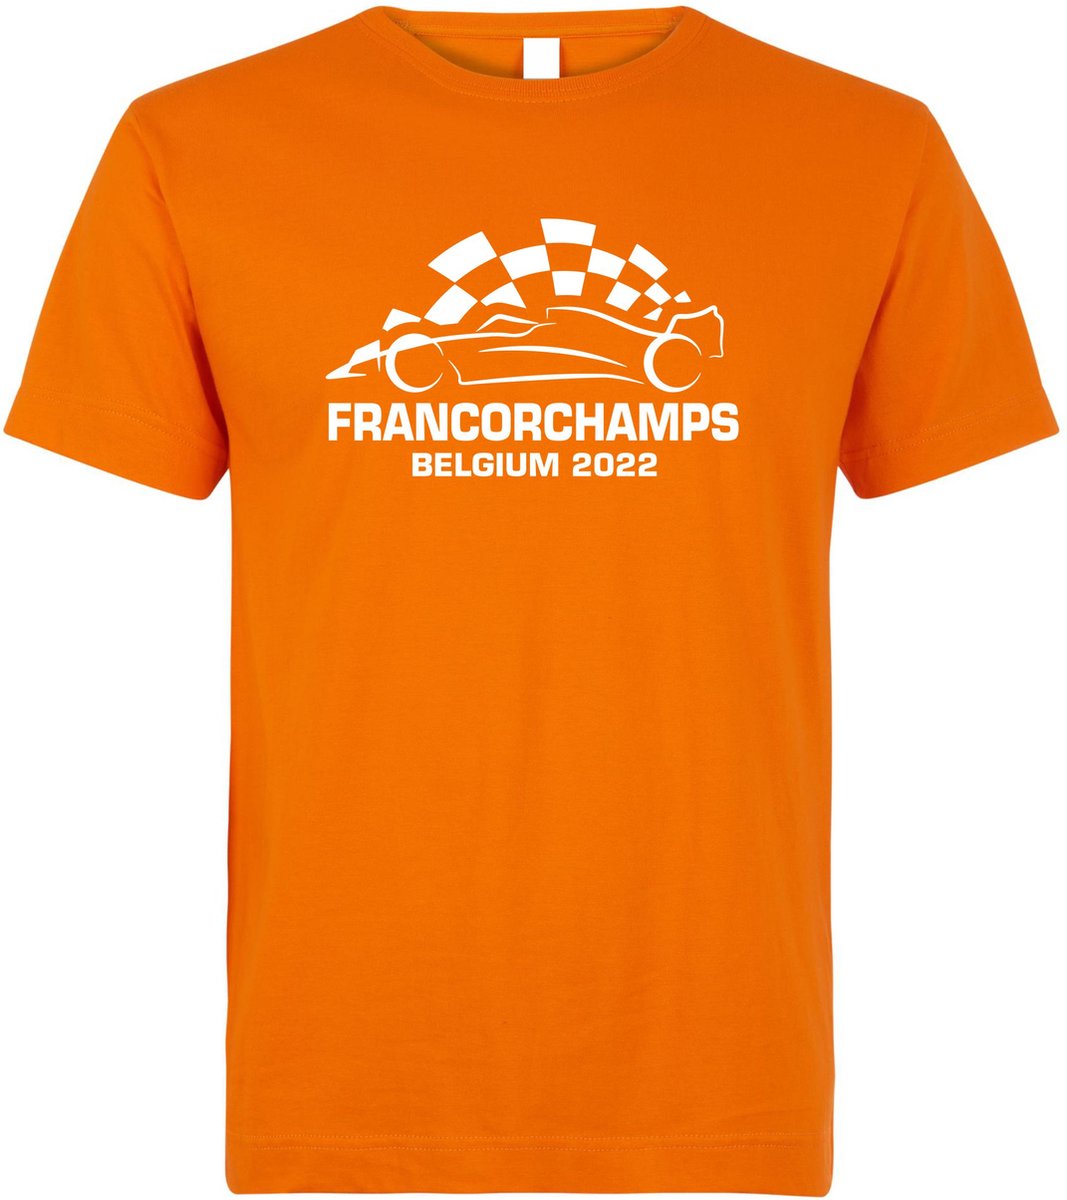 T-shirt kinderen Francorchamps Belgium 2022 met raceauto | Max Verstappen / Red Bull Racing / Formule 1 fan | Grand Prix Circuit Spa-Francorchamps | kleding shirt | Oranje | maat 116